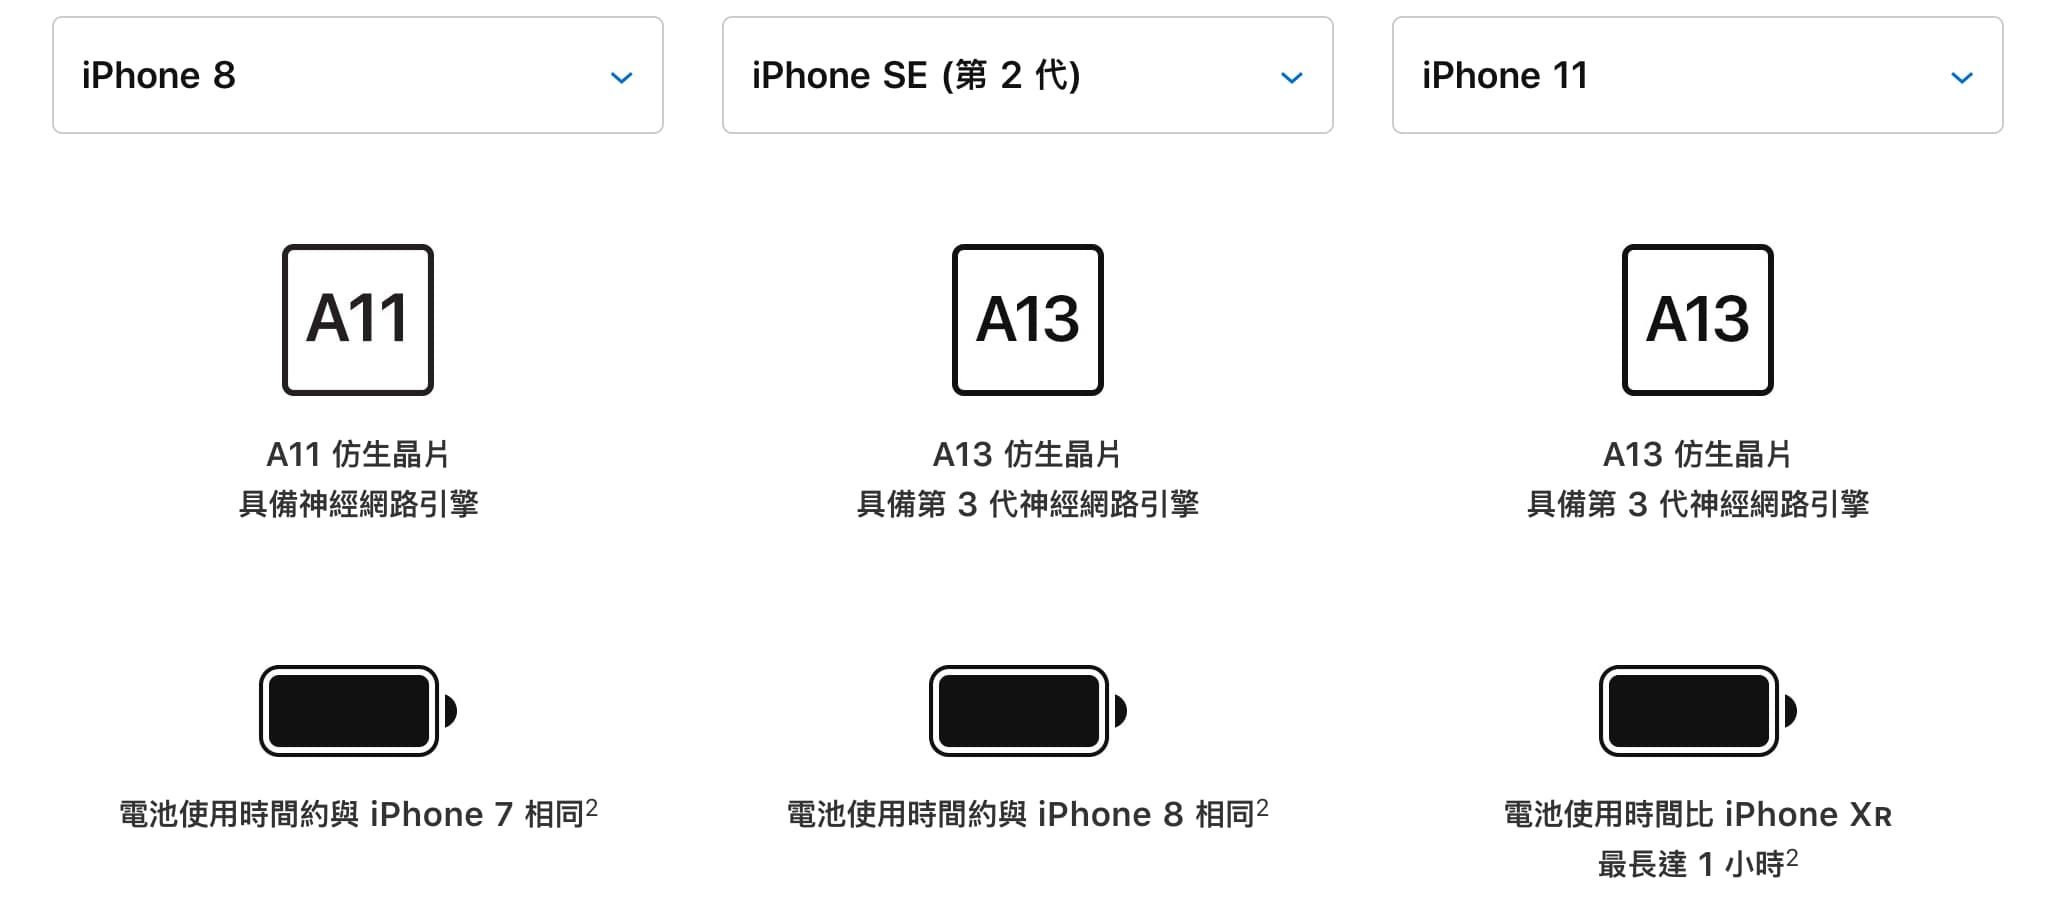 iphonese vs iphone8 vs iphone11 3